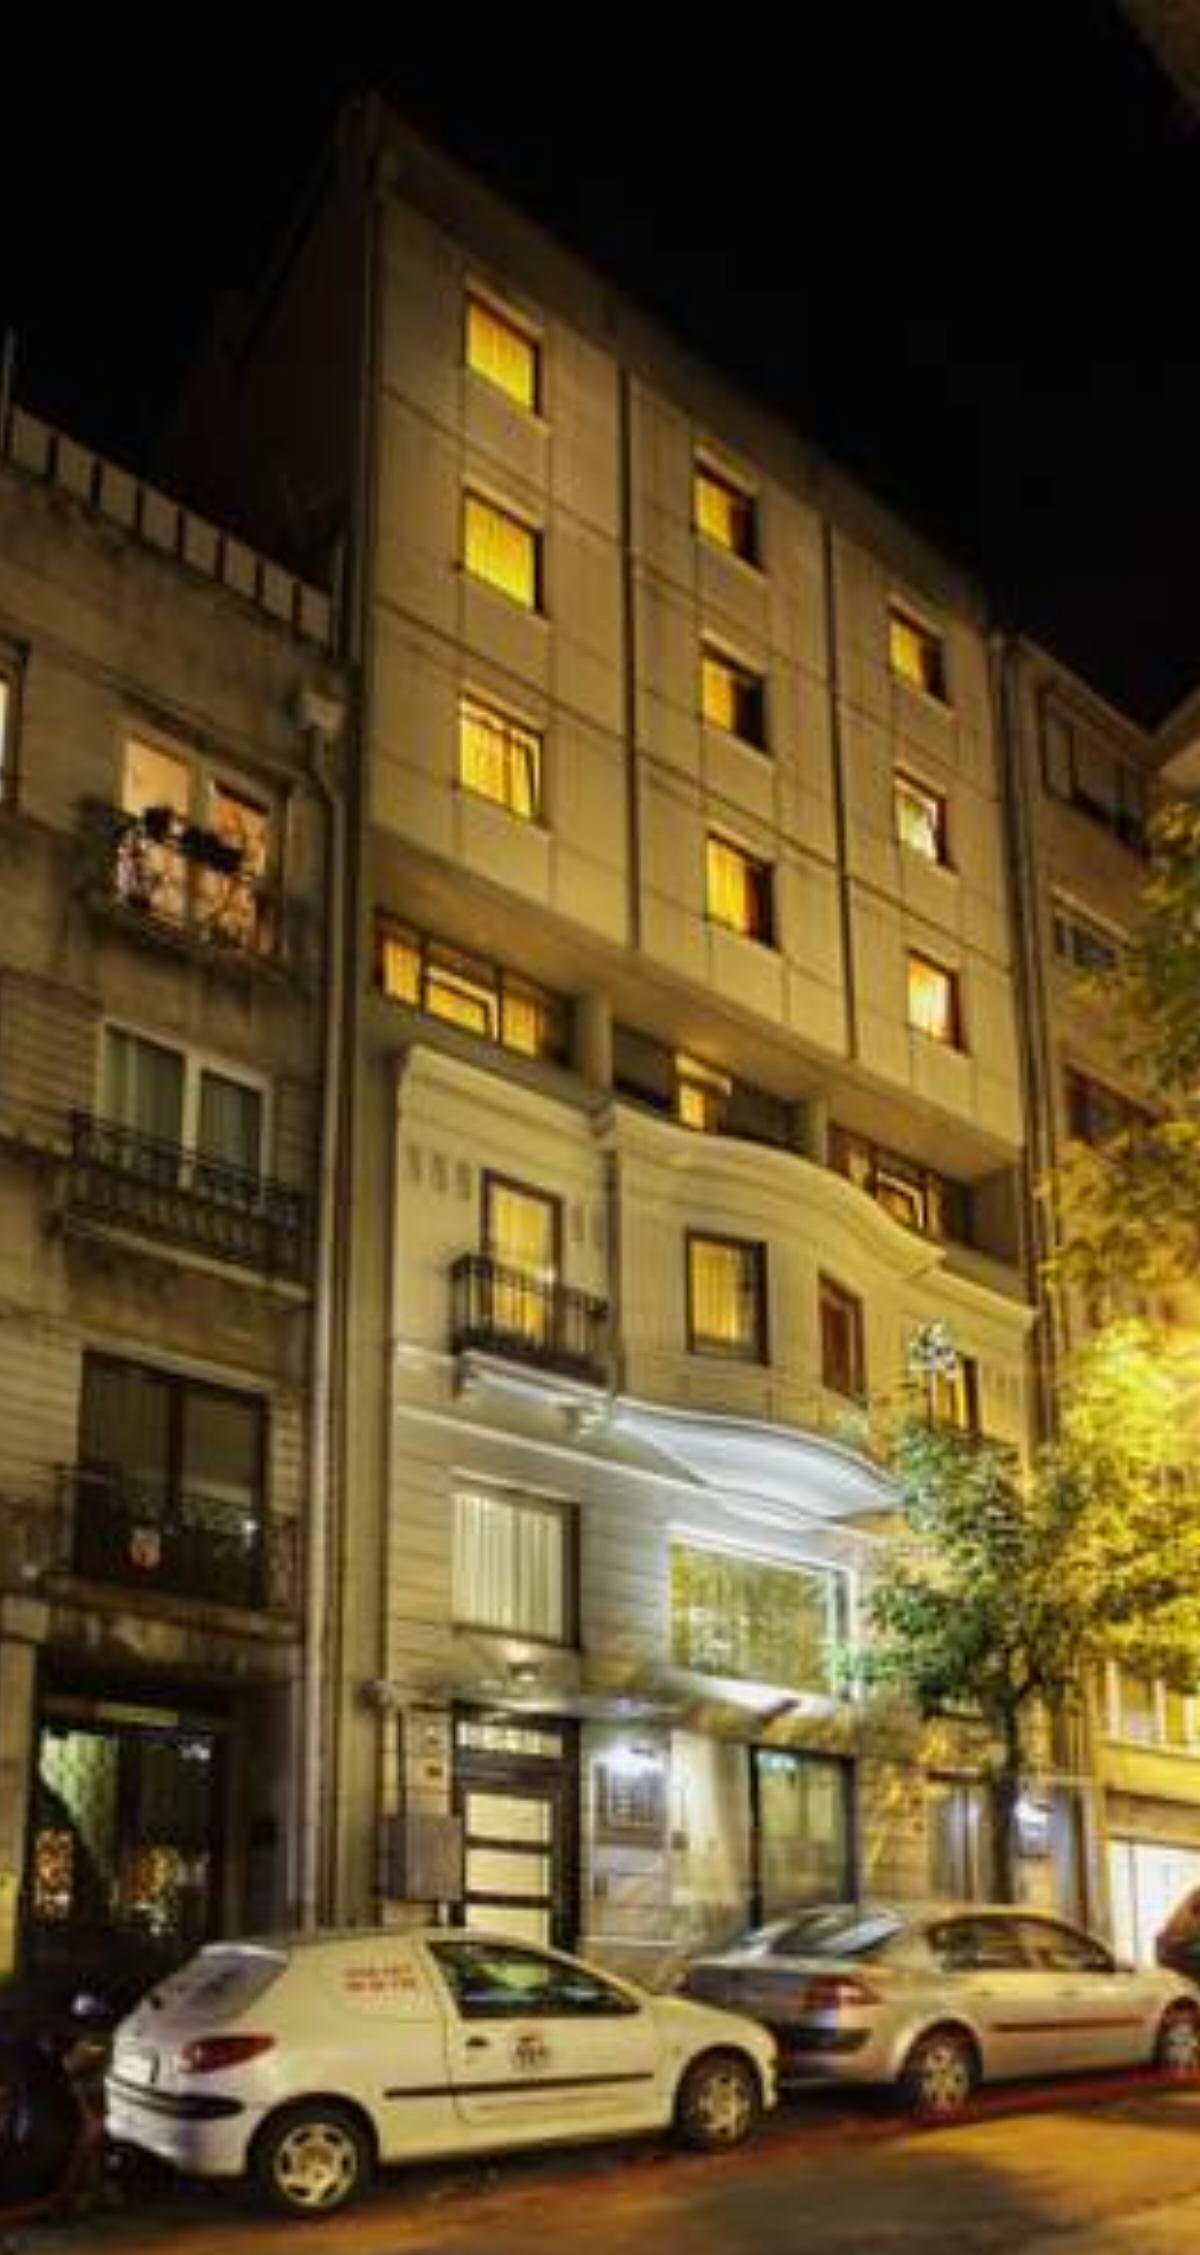 Gallery Hotel & Residence Hotel İstanbul Turkey